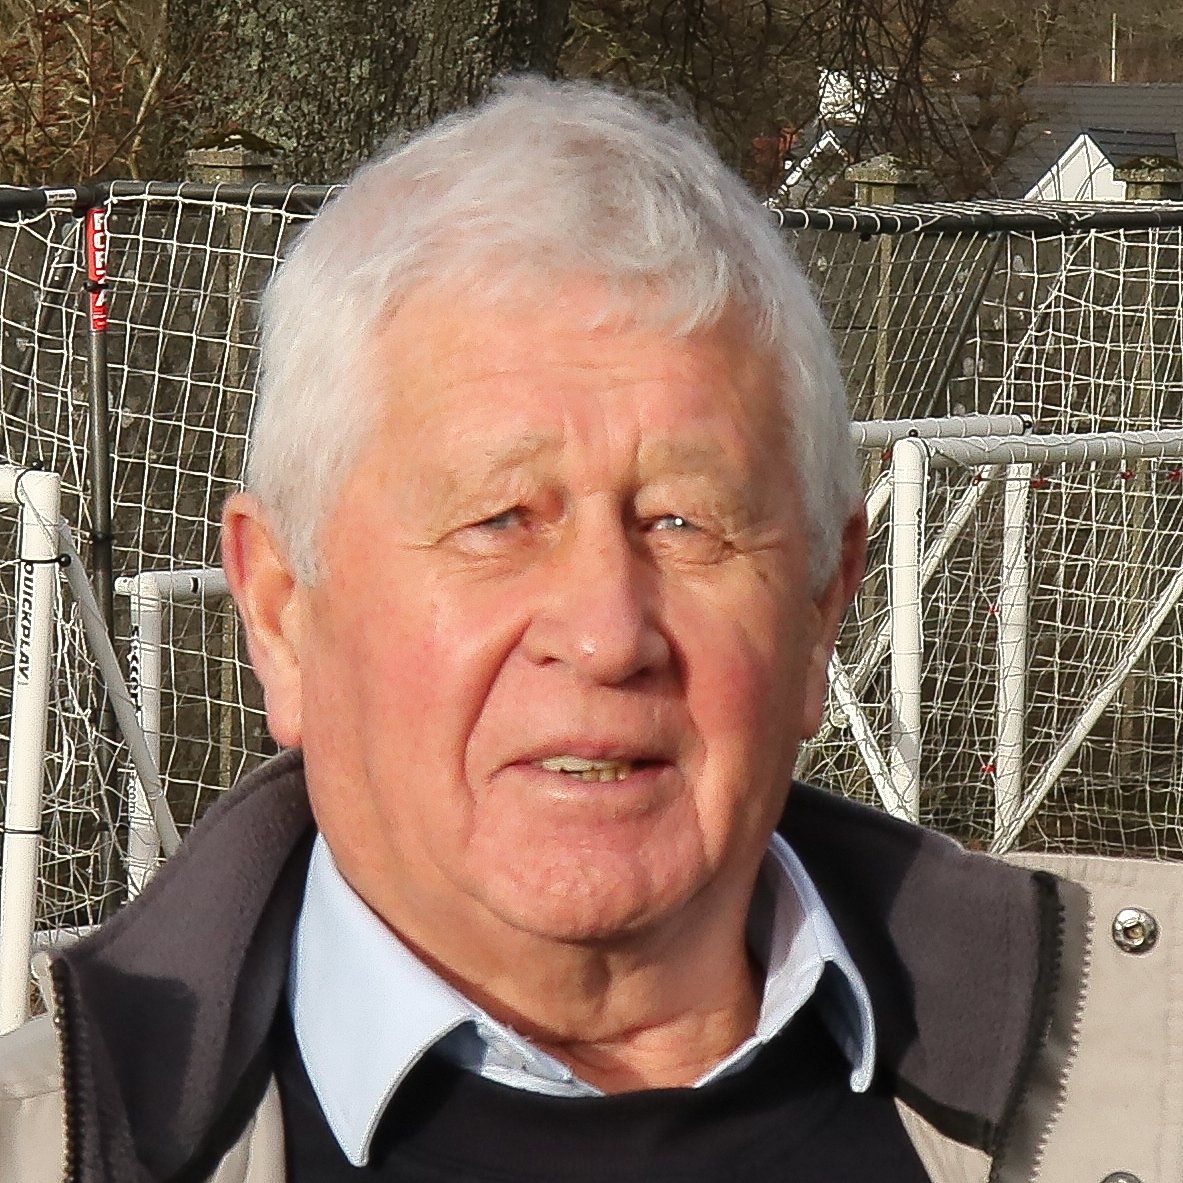 Ritchie Maxwell, Manager, Dalbeattie Star FC